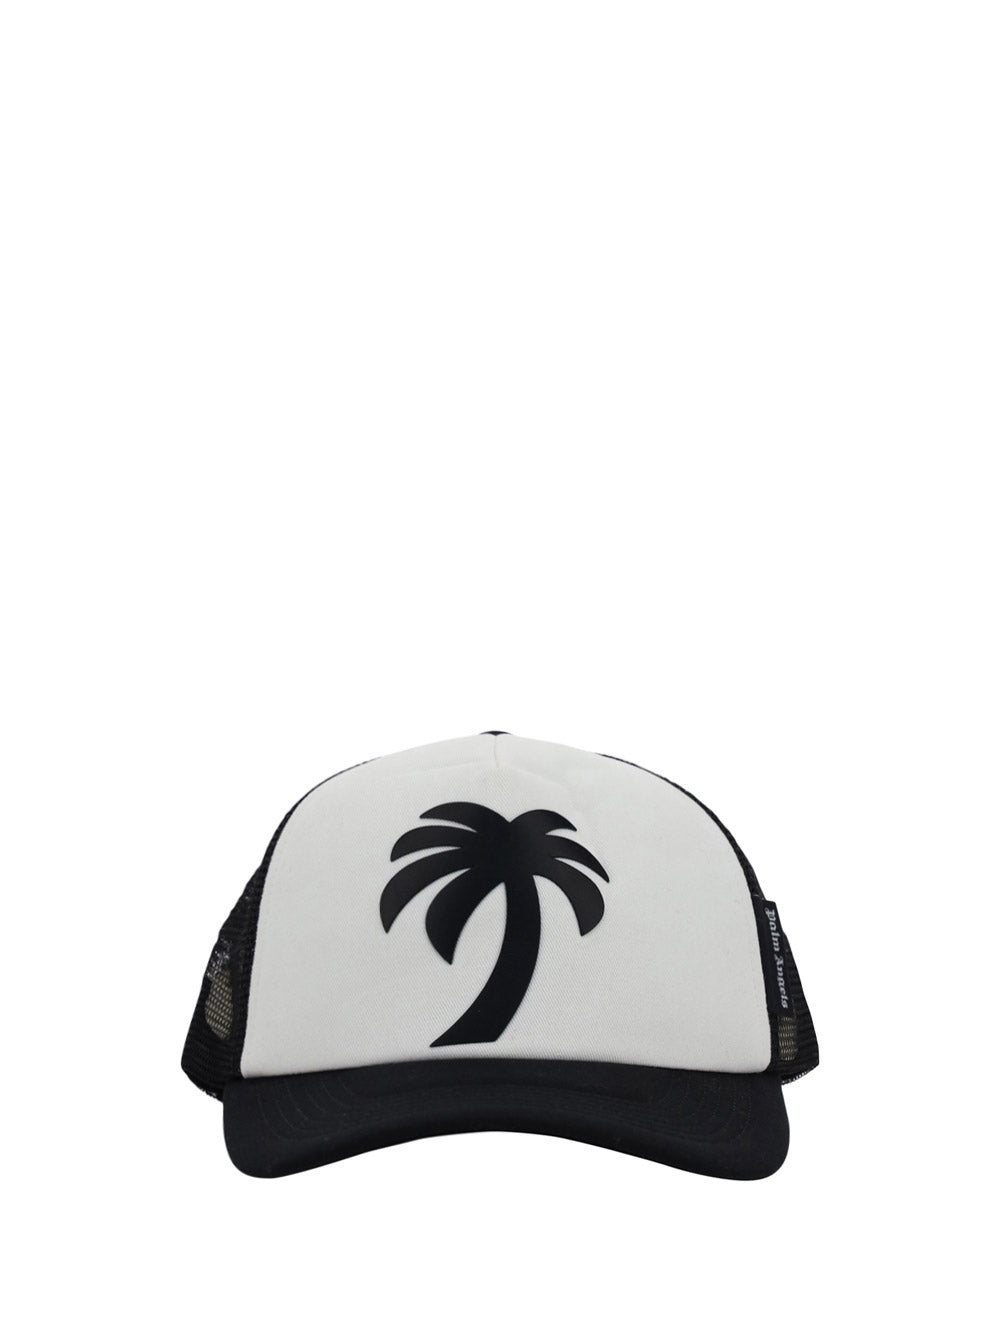 Palm Trucker Cap - Black